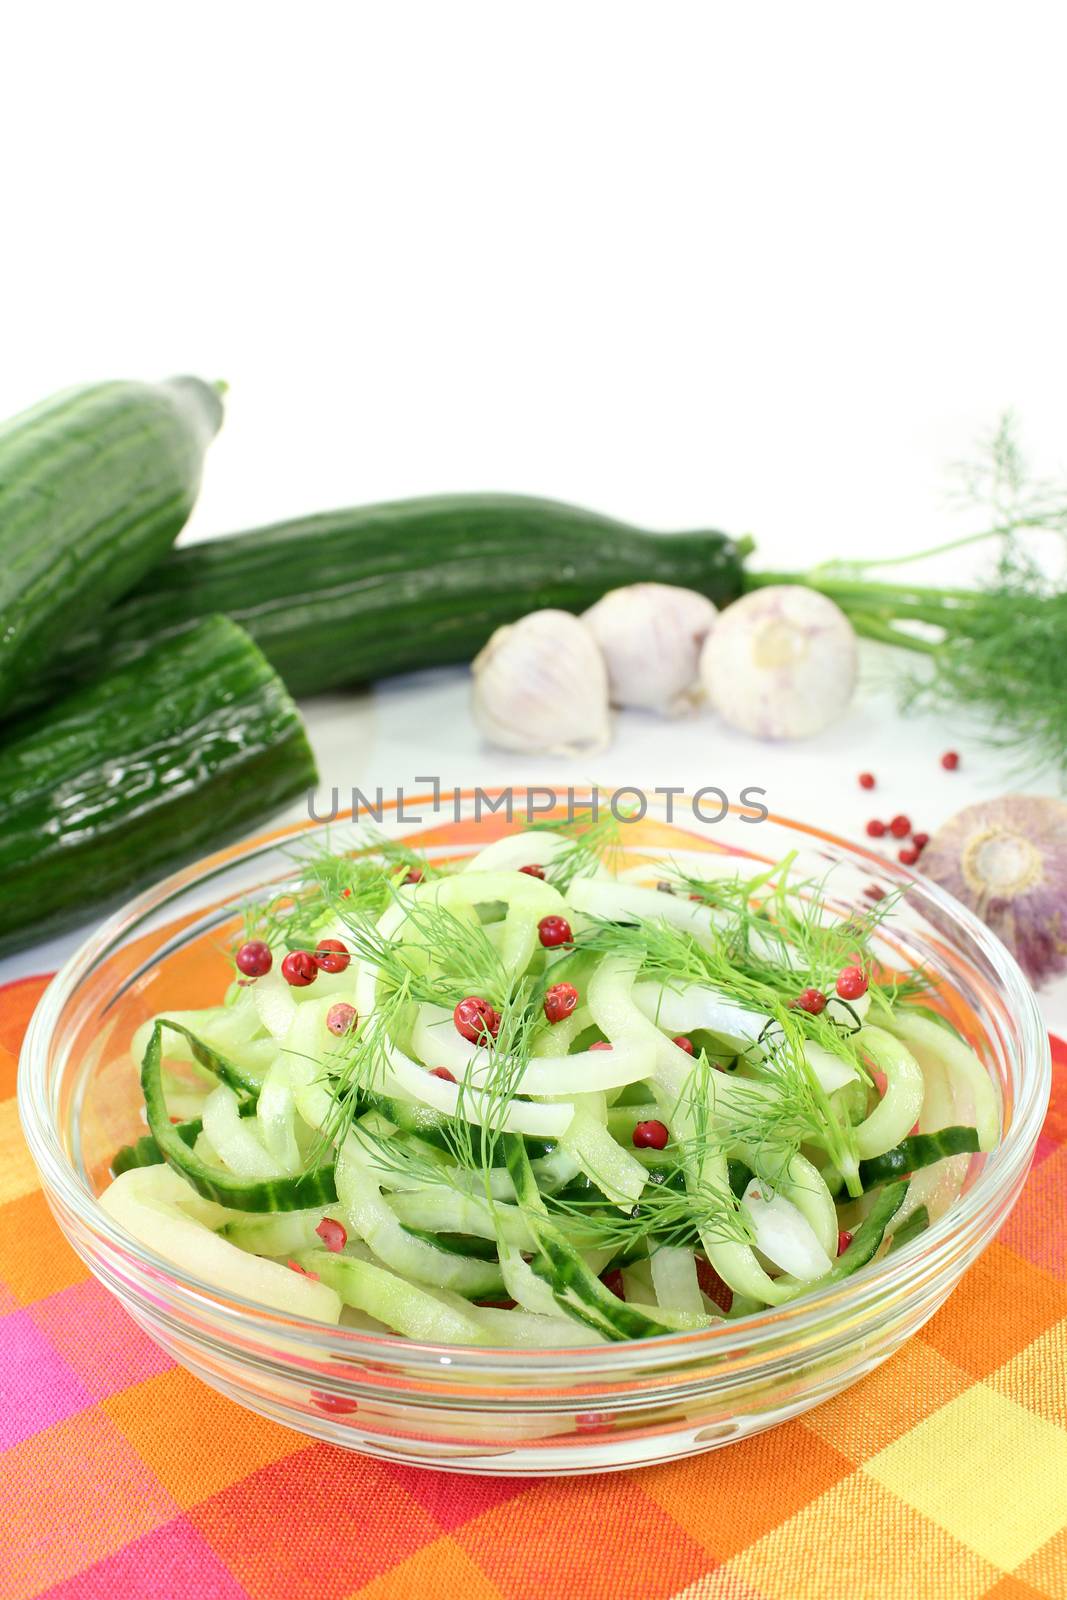 Cucumber salad by silencefoto